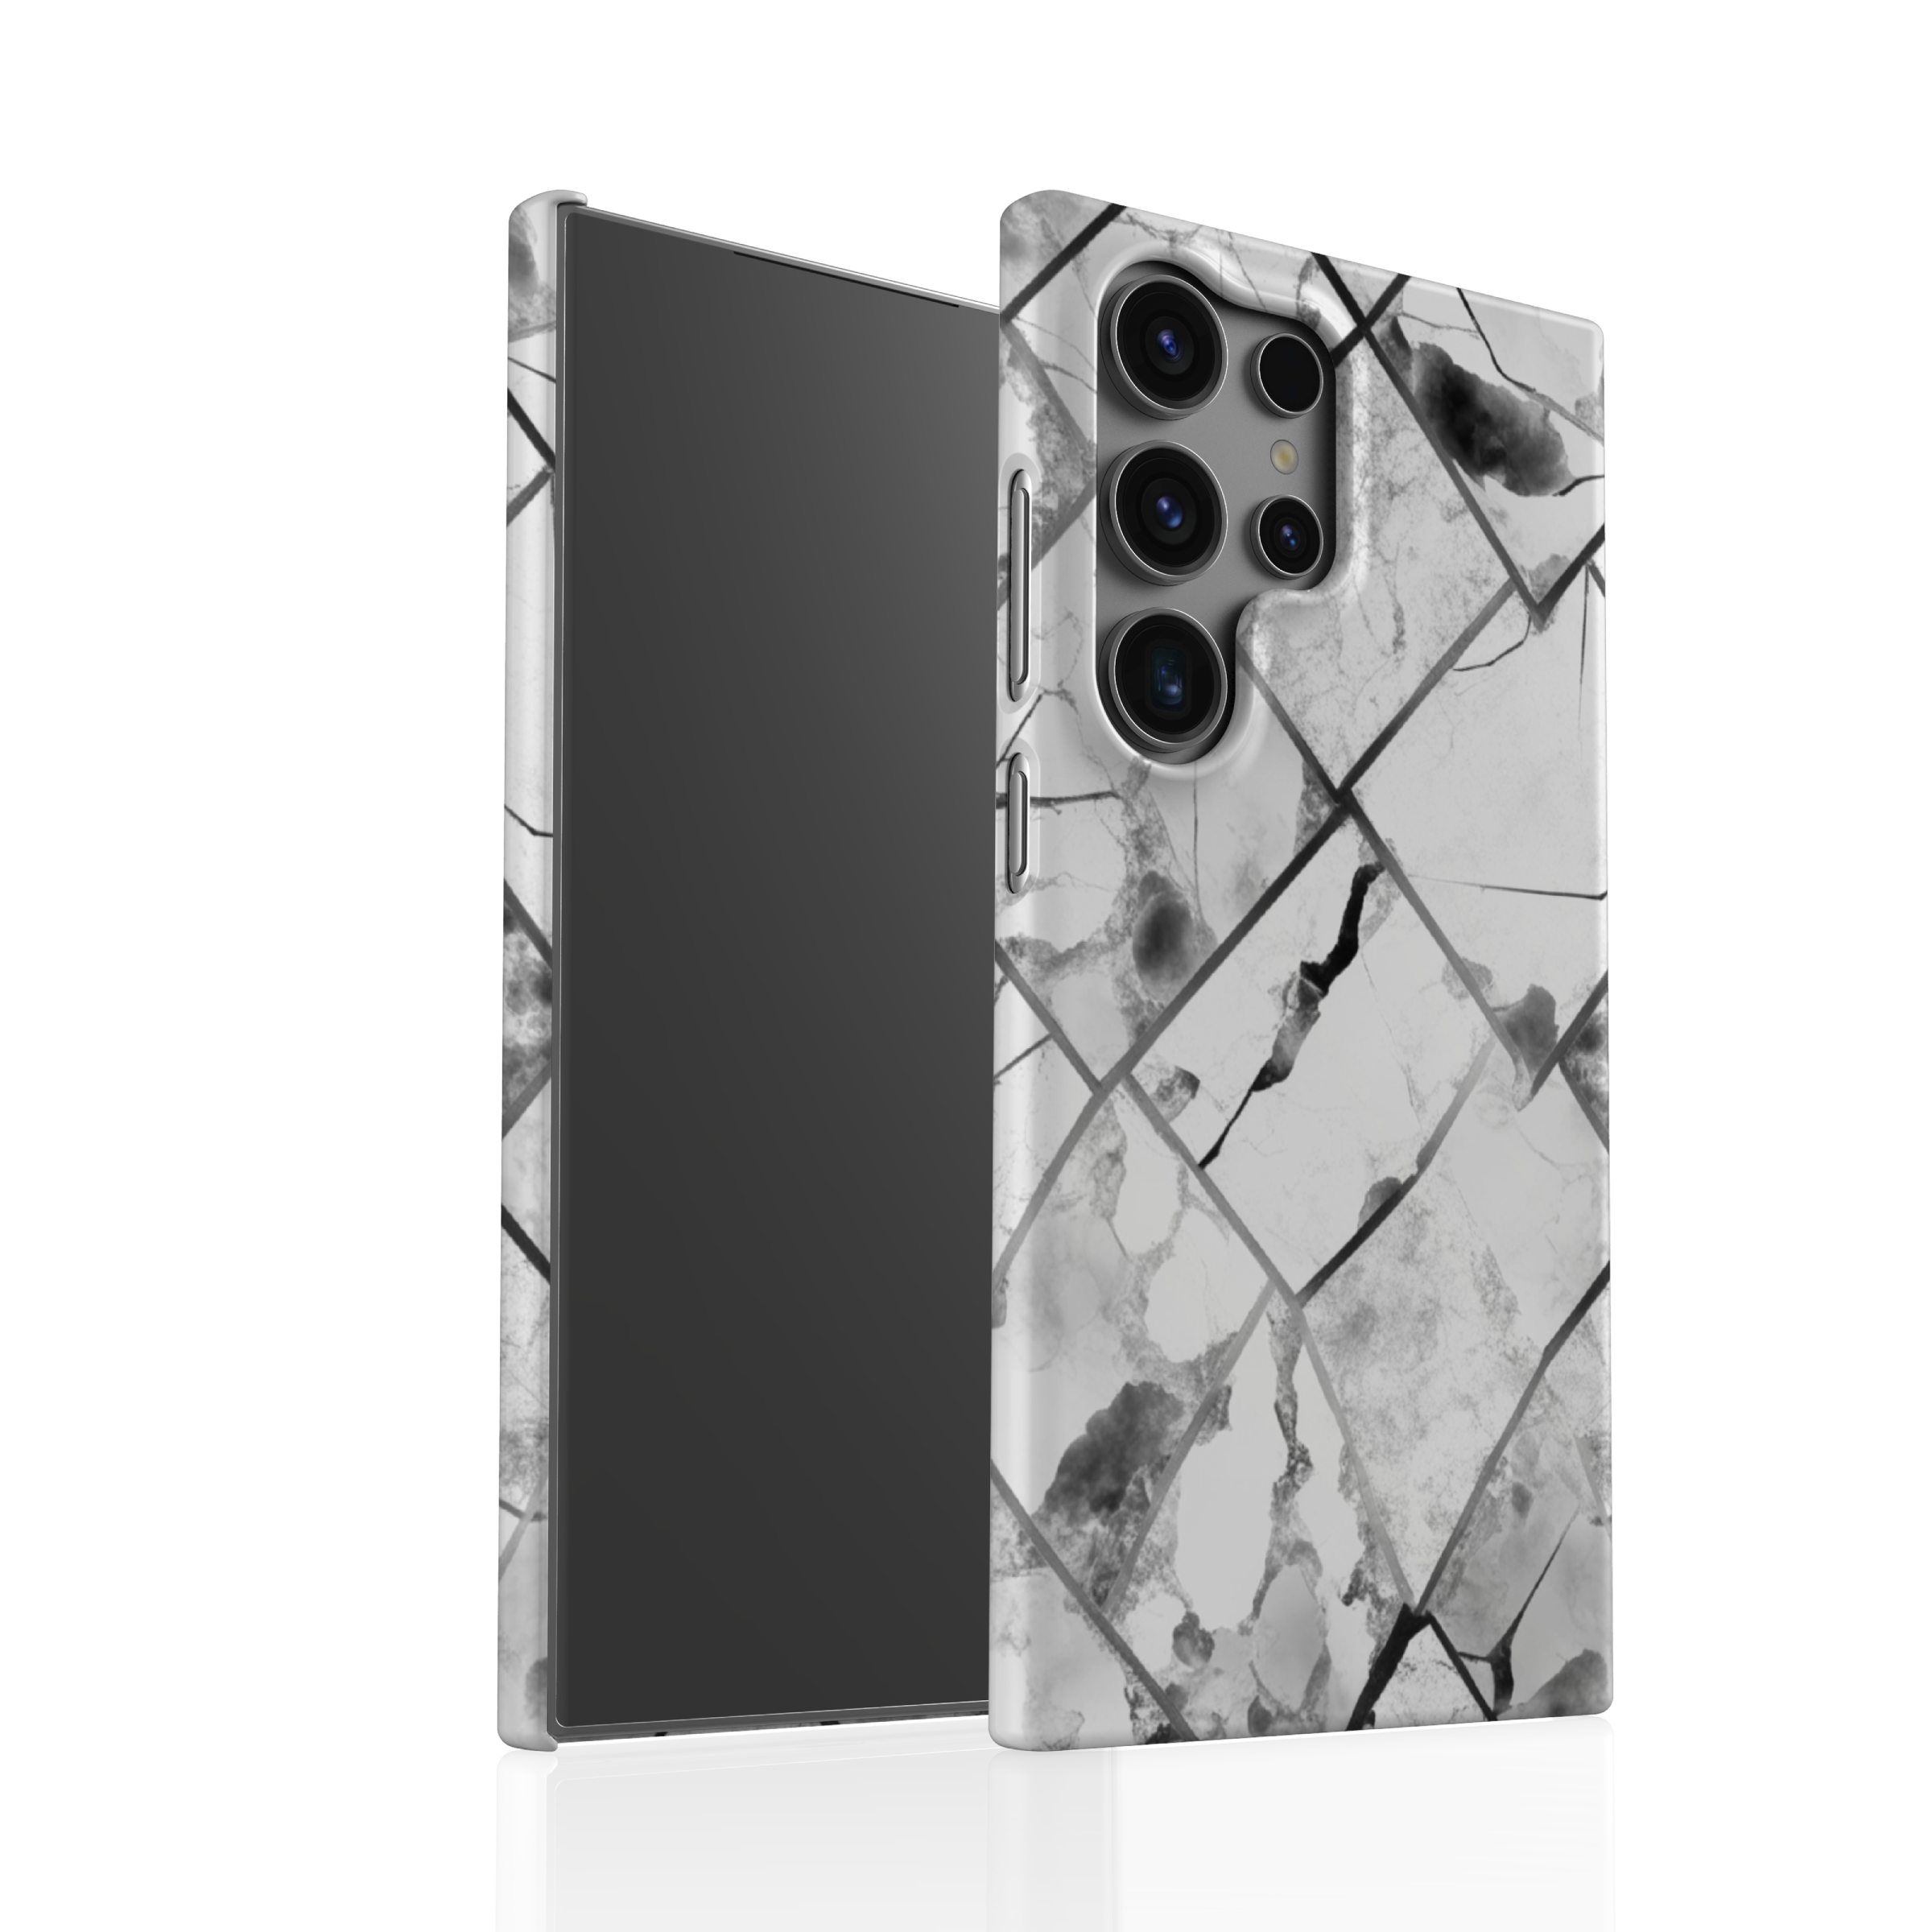 Samsung Slim Case - Diamond Noir